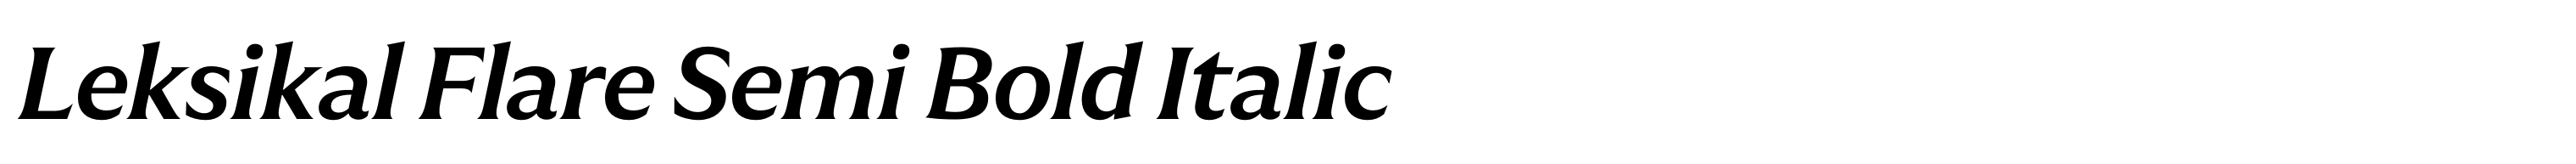 Leksikal Flare Semi Bold Italic